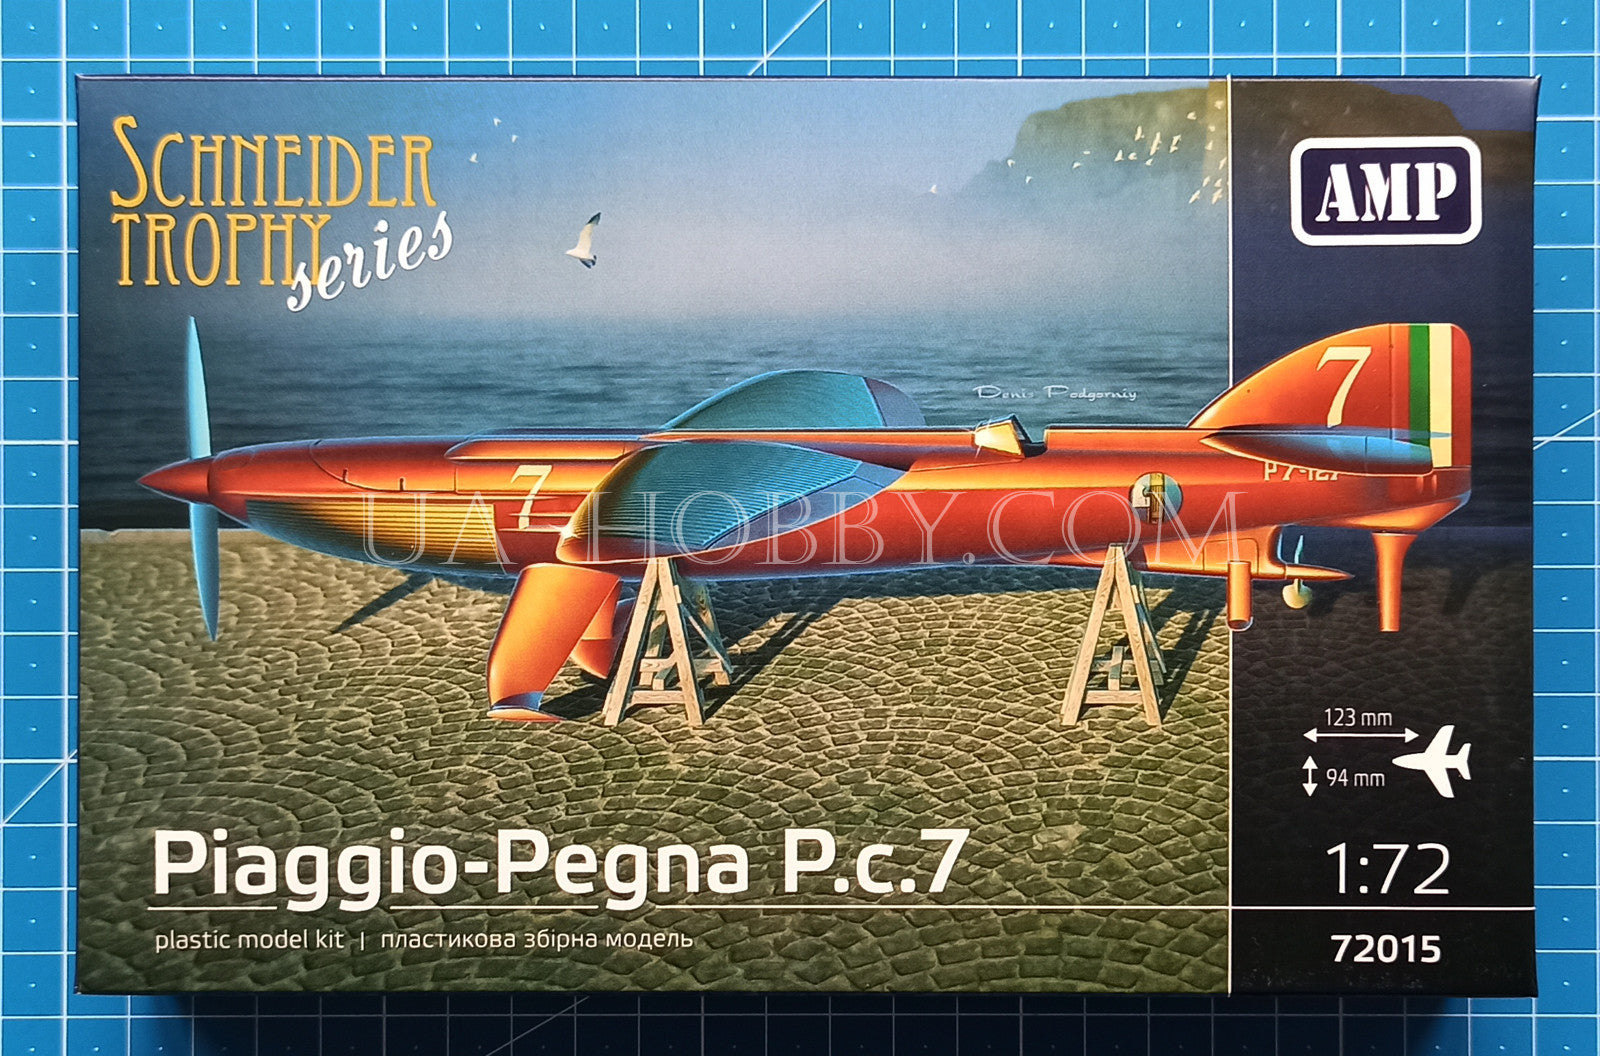 1/72 Piaggio Pegna PC.7 Schneider Trophy Series. AMP 72015